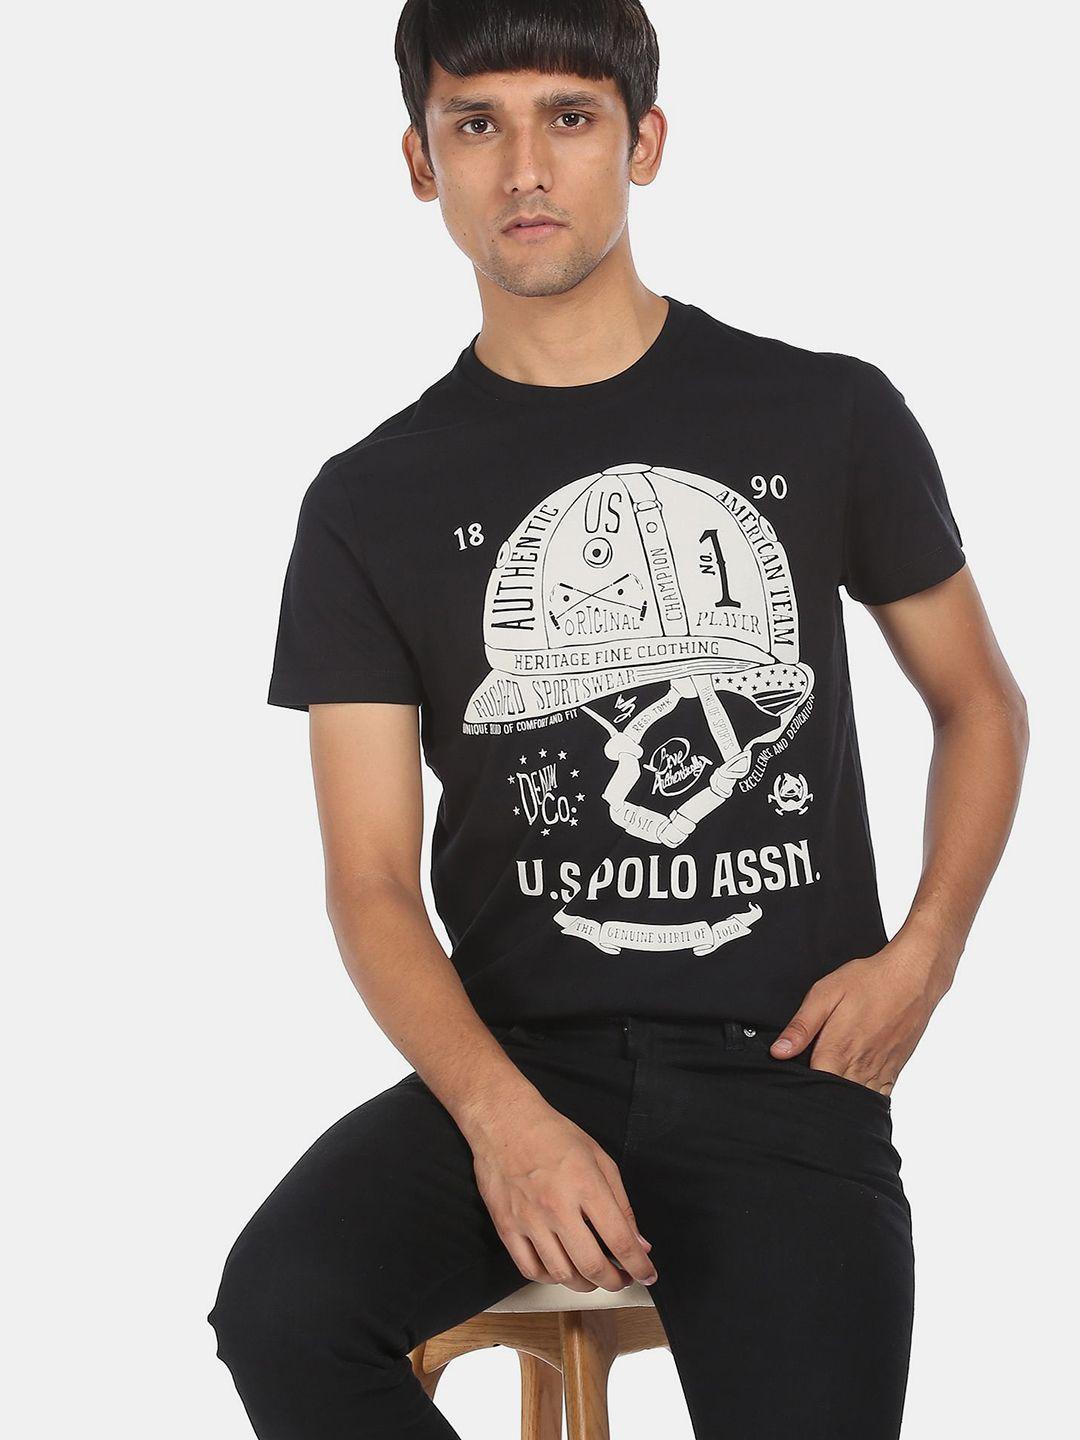 u. s. polo assn men black  white brand logo printed pure cotton t-shirt